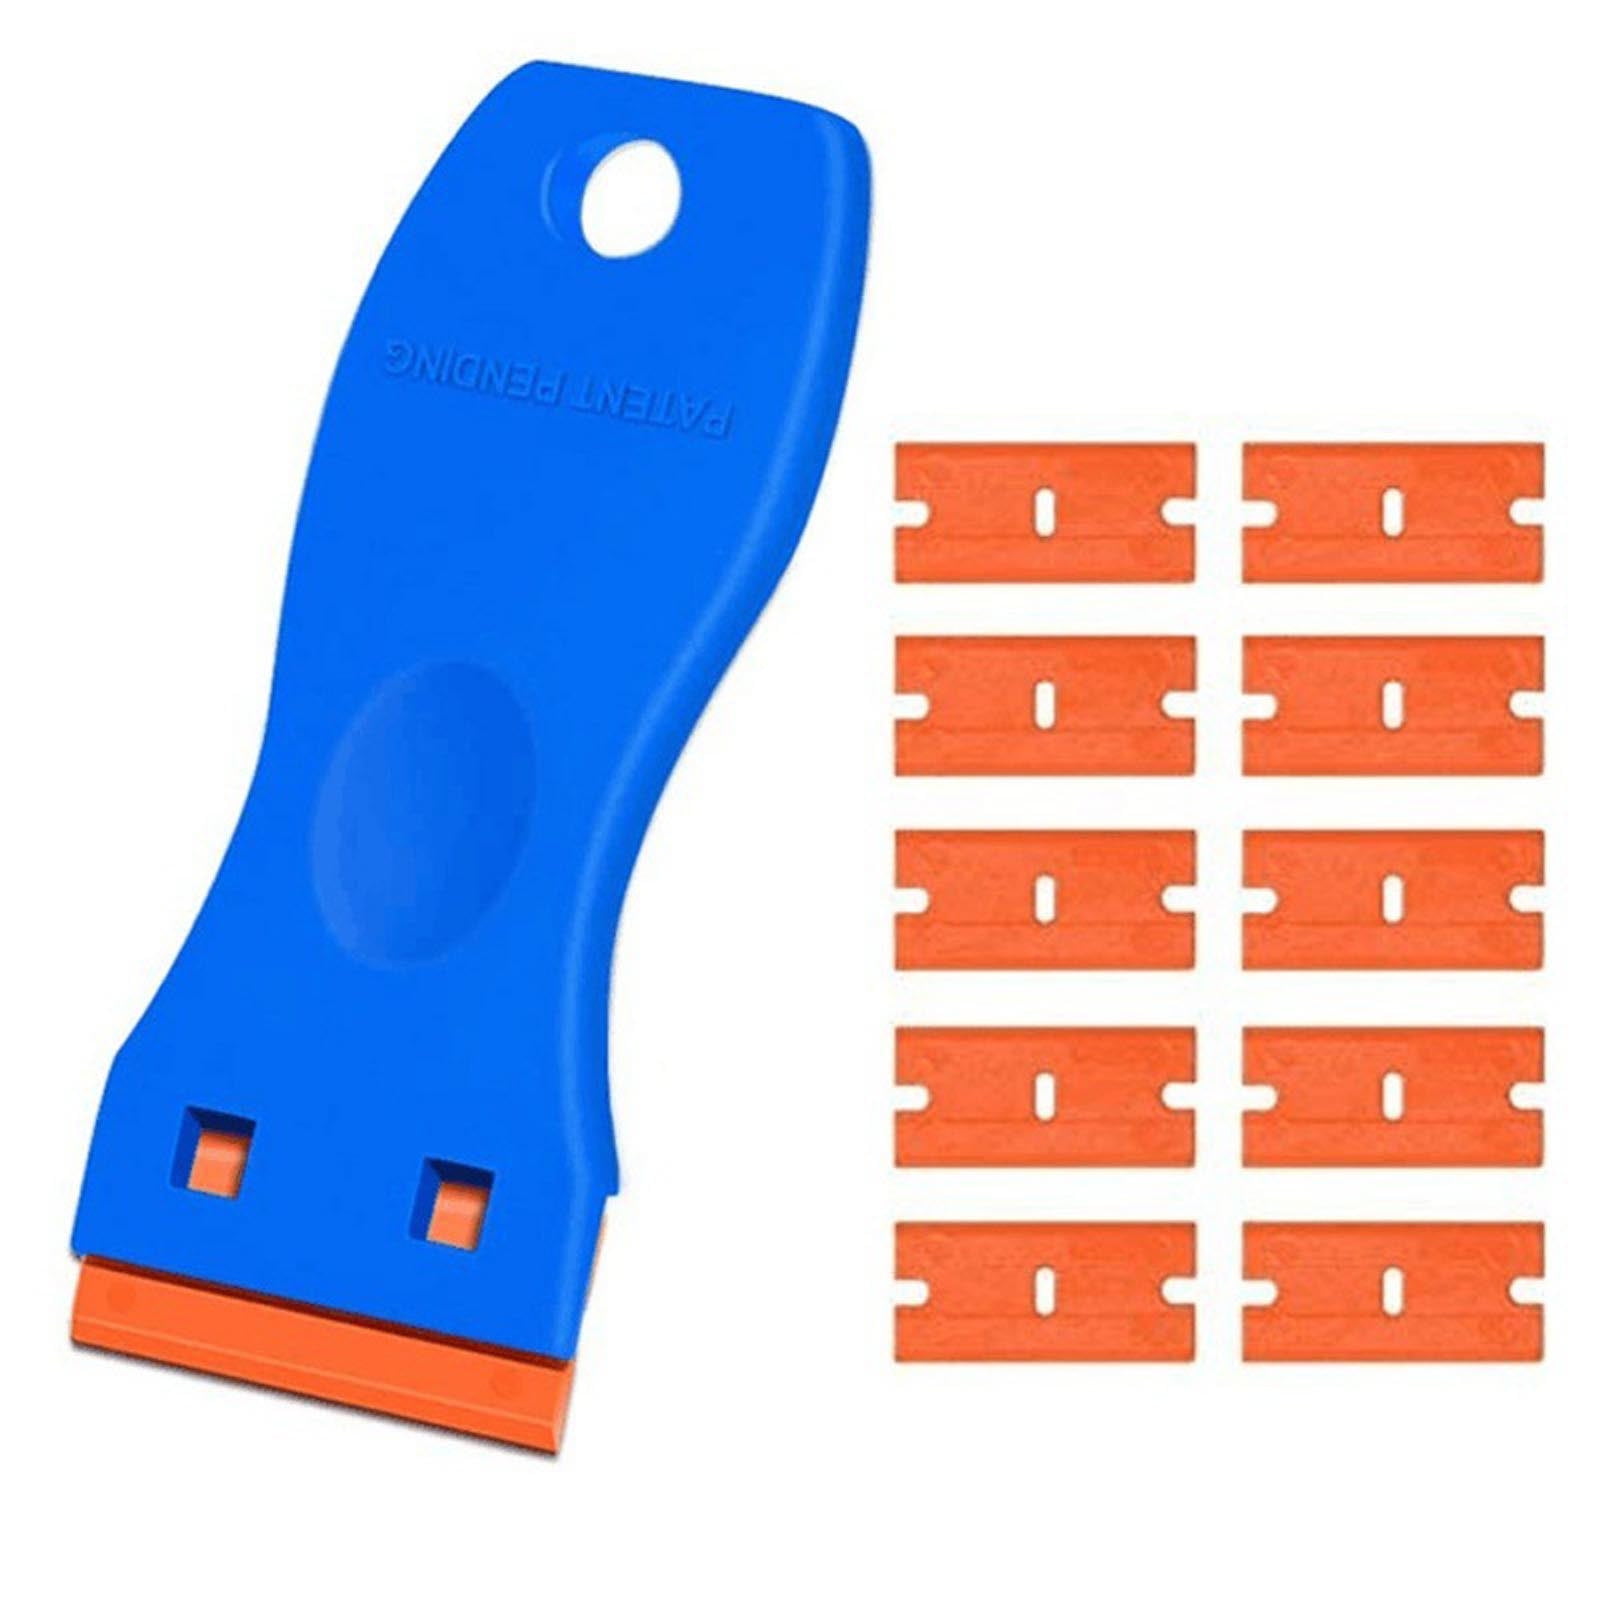 Ainiv Plastic Razor Blade Scrapers, Scraper Tool with 20PCS Blades,  Multi-funtional Cleaning Razor Scraper for Removing Stickers, Labels,  Caulk